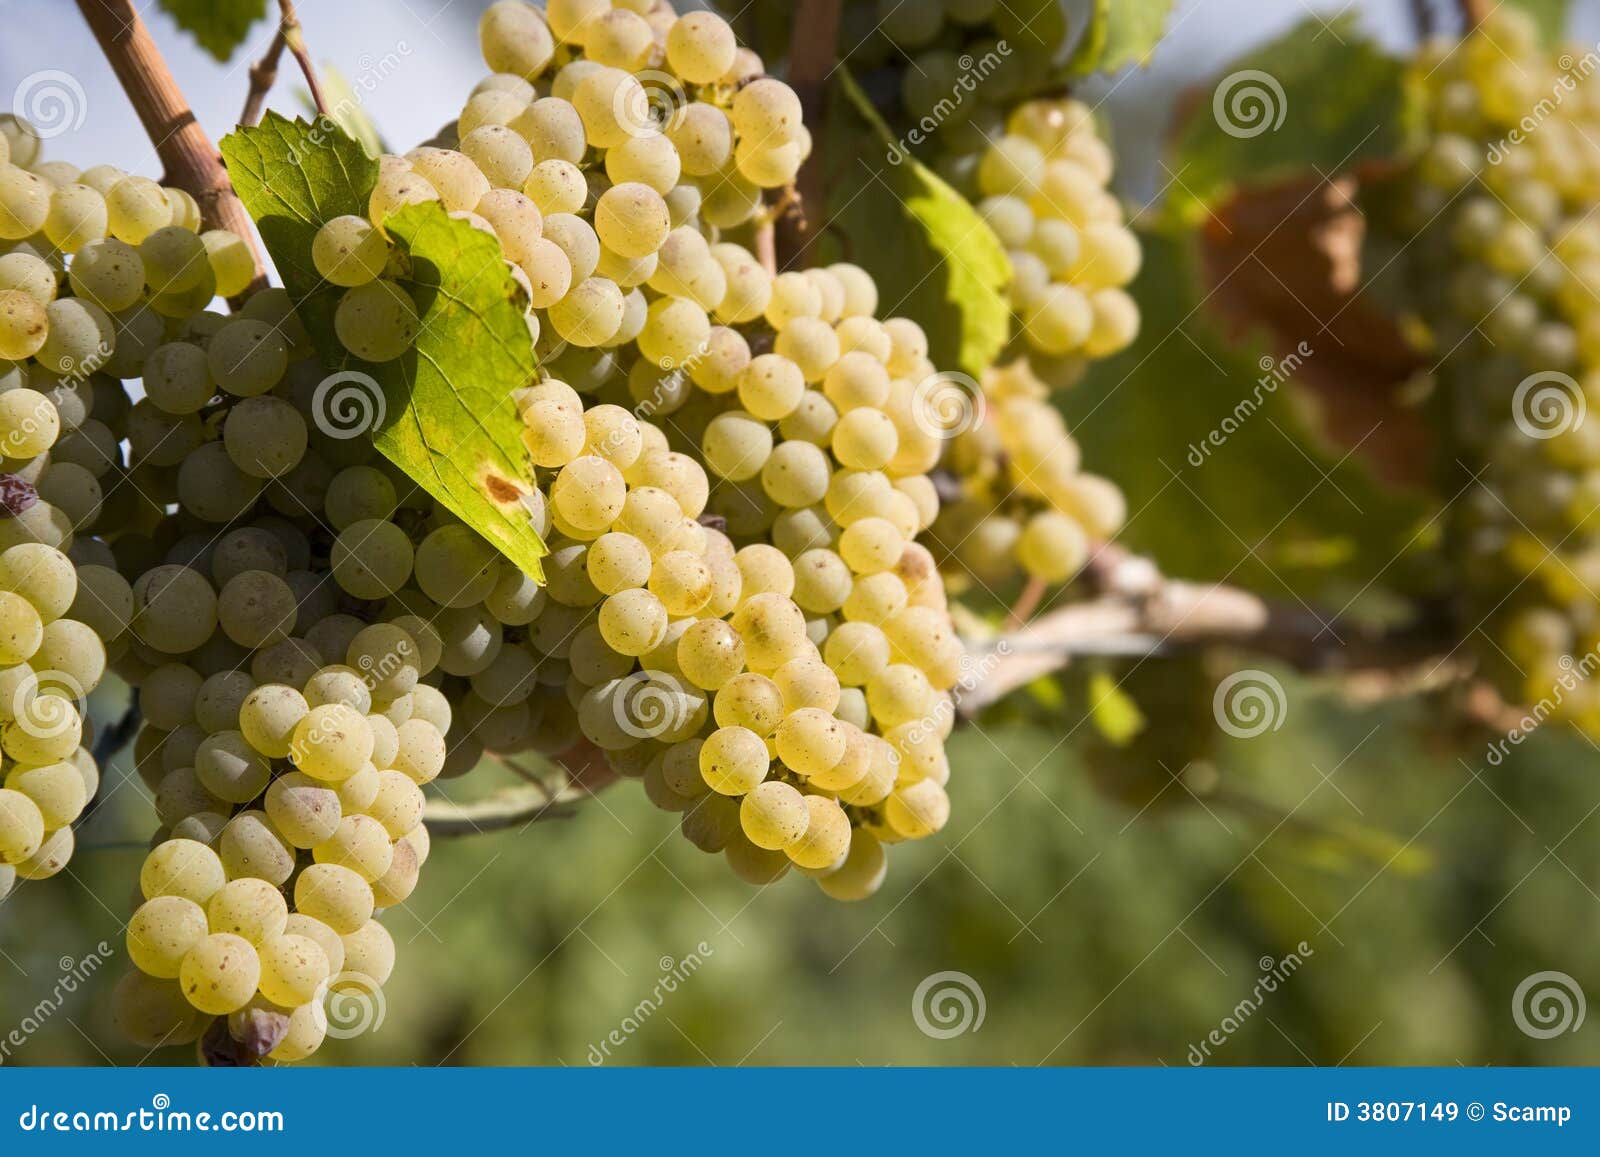 chardonnay grapes in vineyard